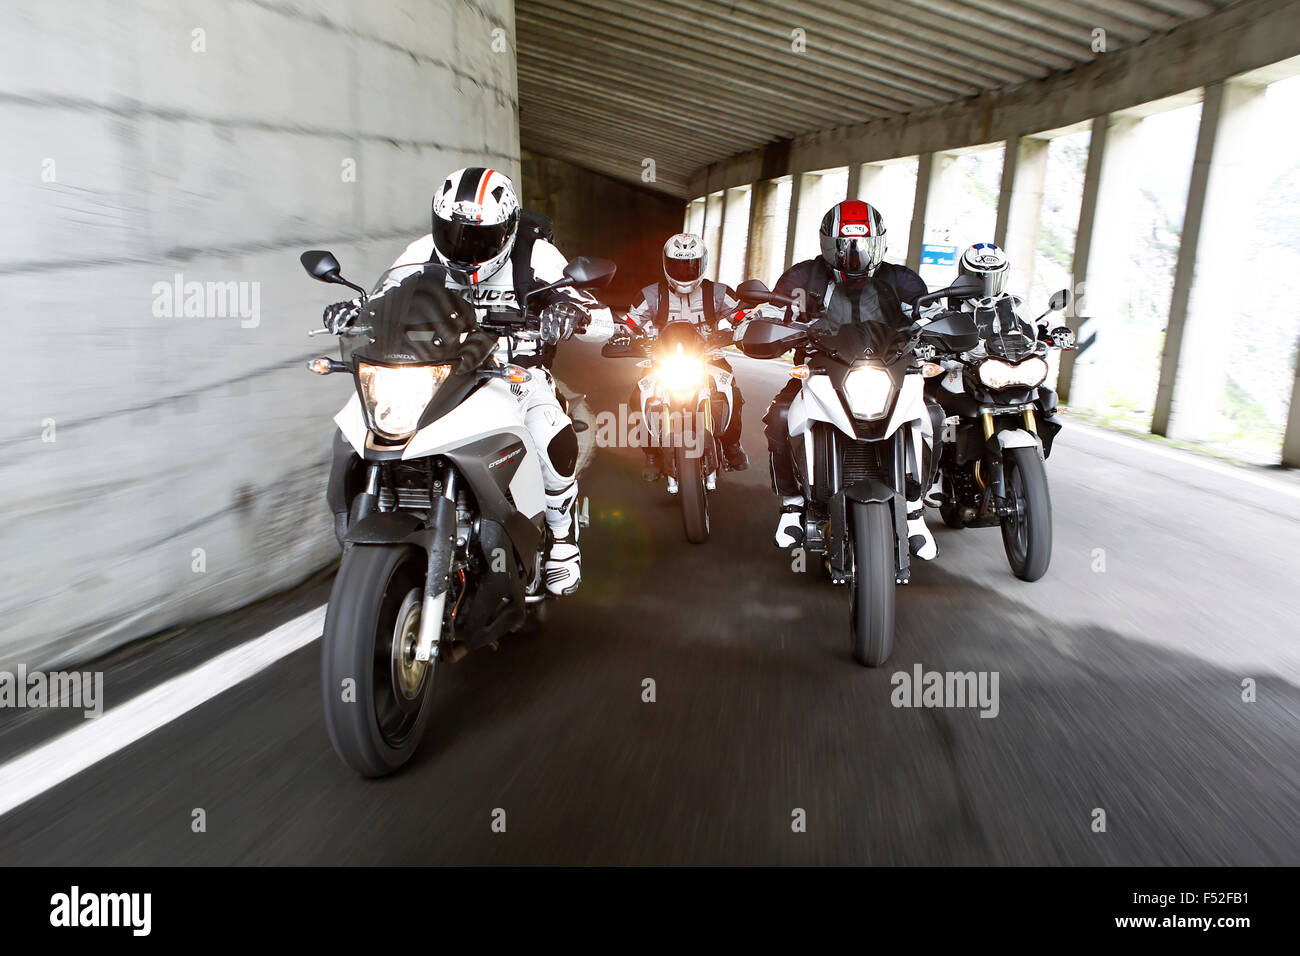 Grupo de motocicletas, las Enduros, frontal, grupo, moviéndose en la pesadilla del túnel, Foto de stock